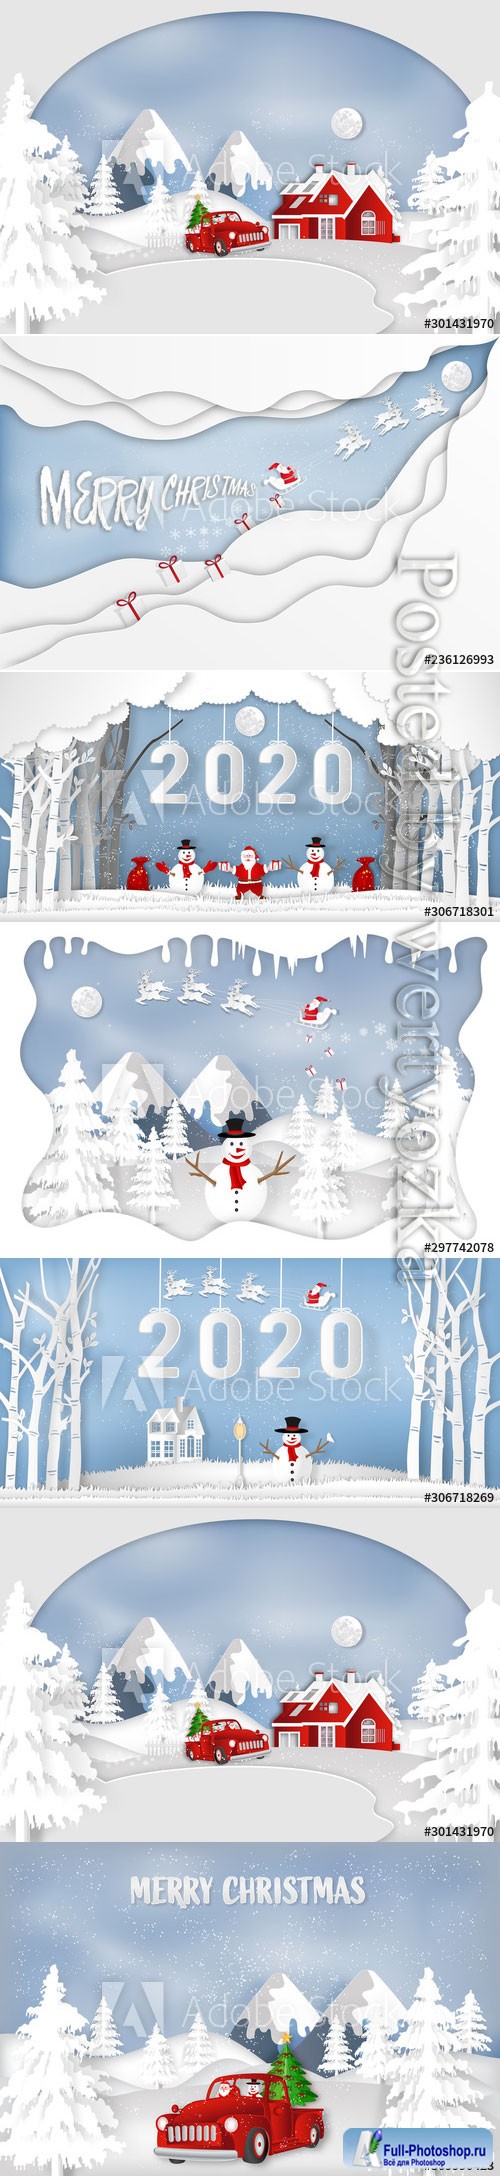 Paper art christmas, cut and digital craft style of Santa 